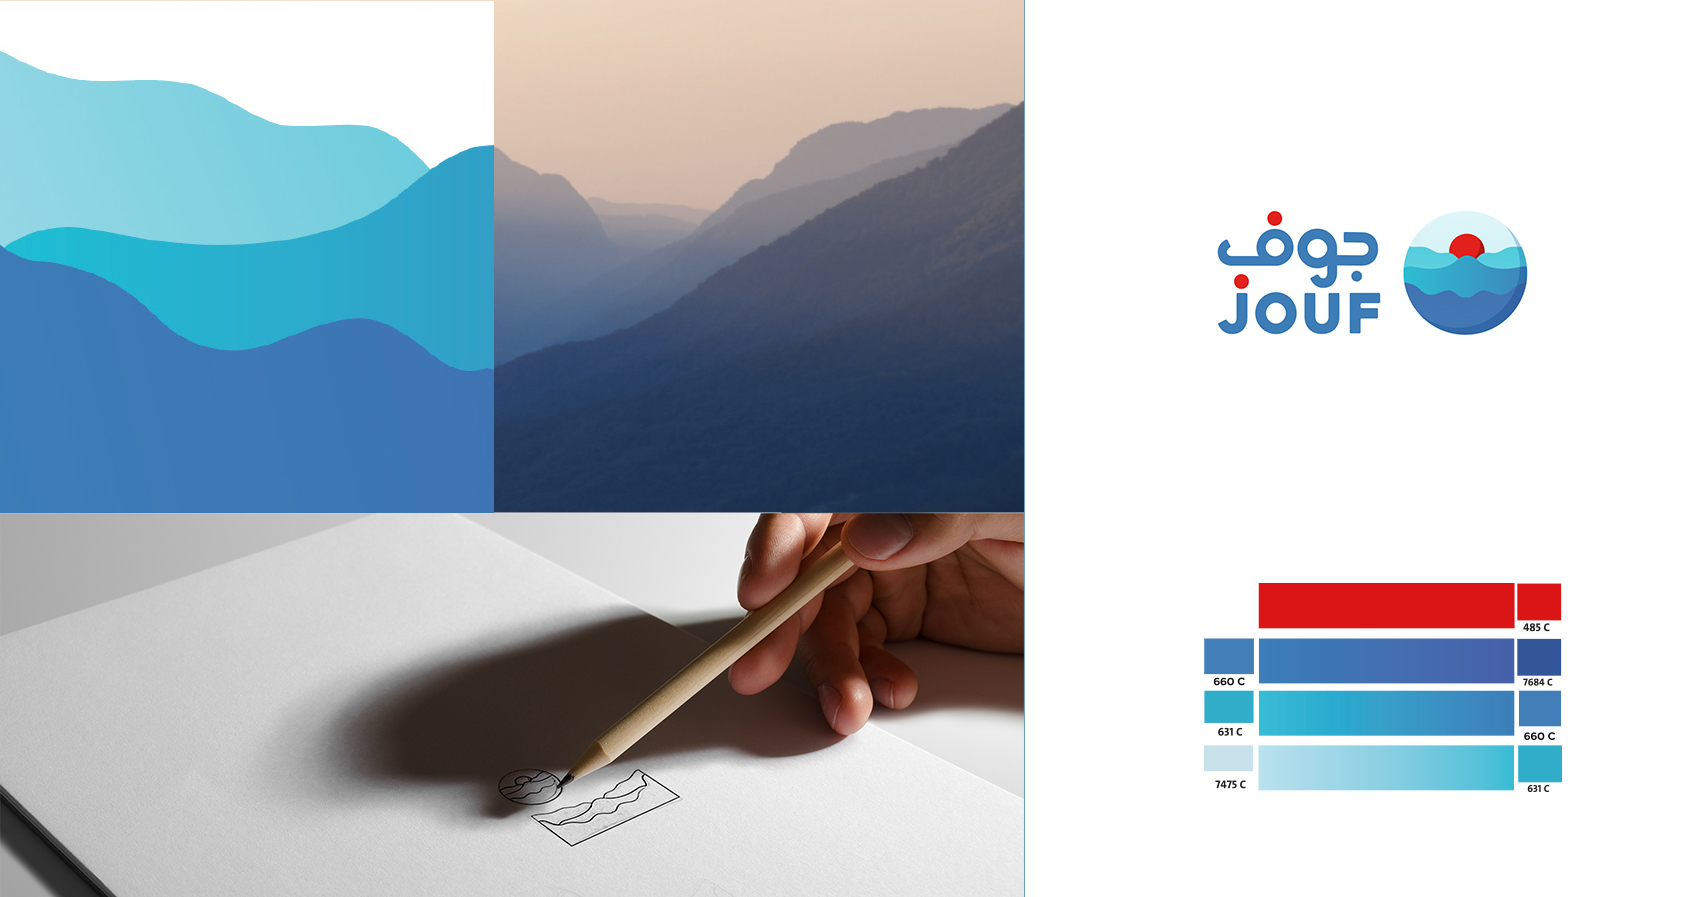 Jouf Water Rebranding in Qatar